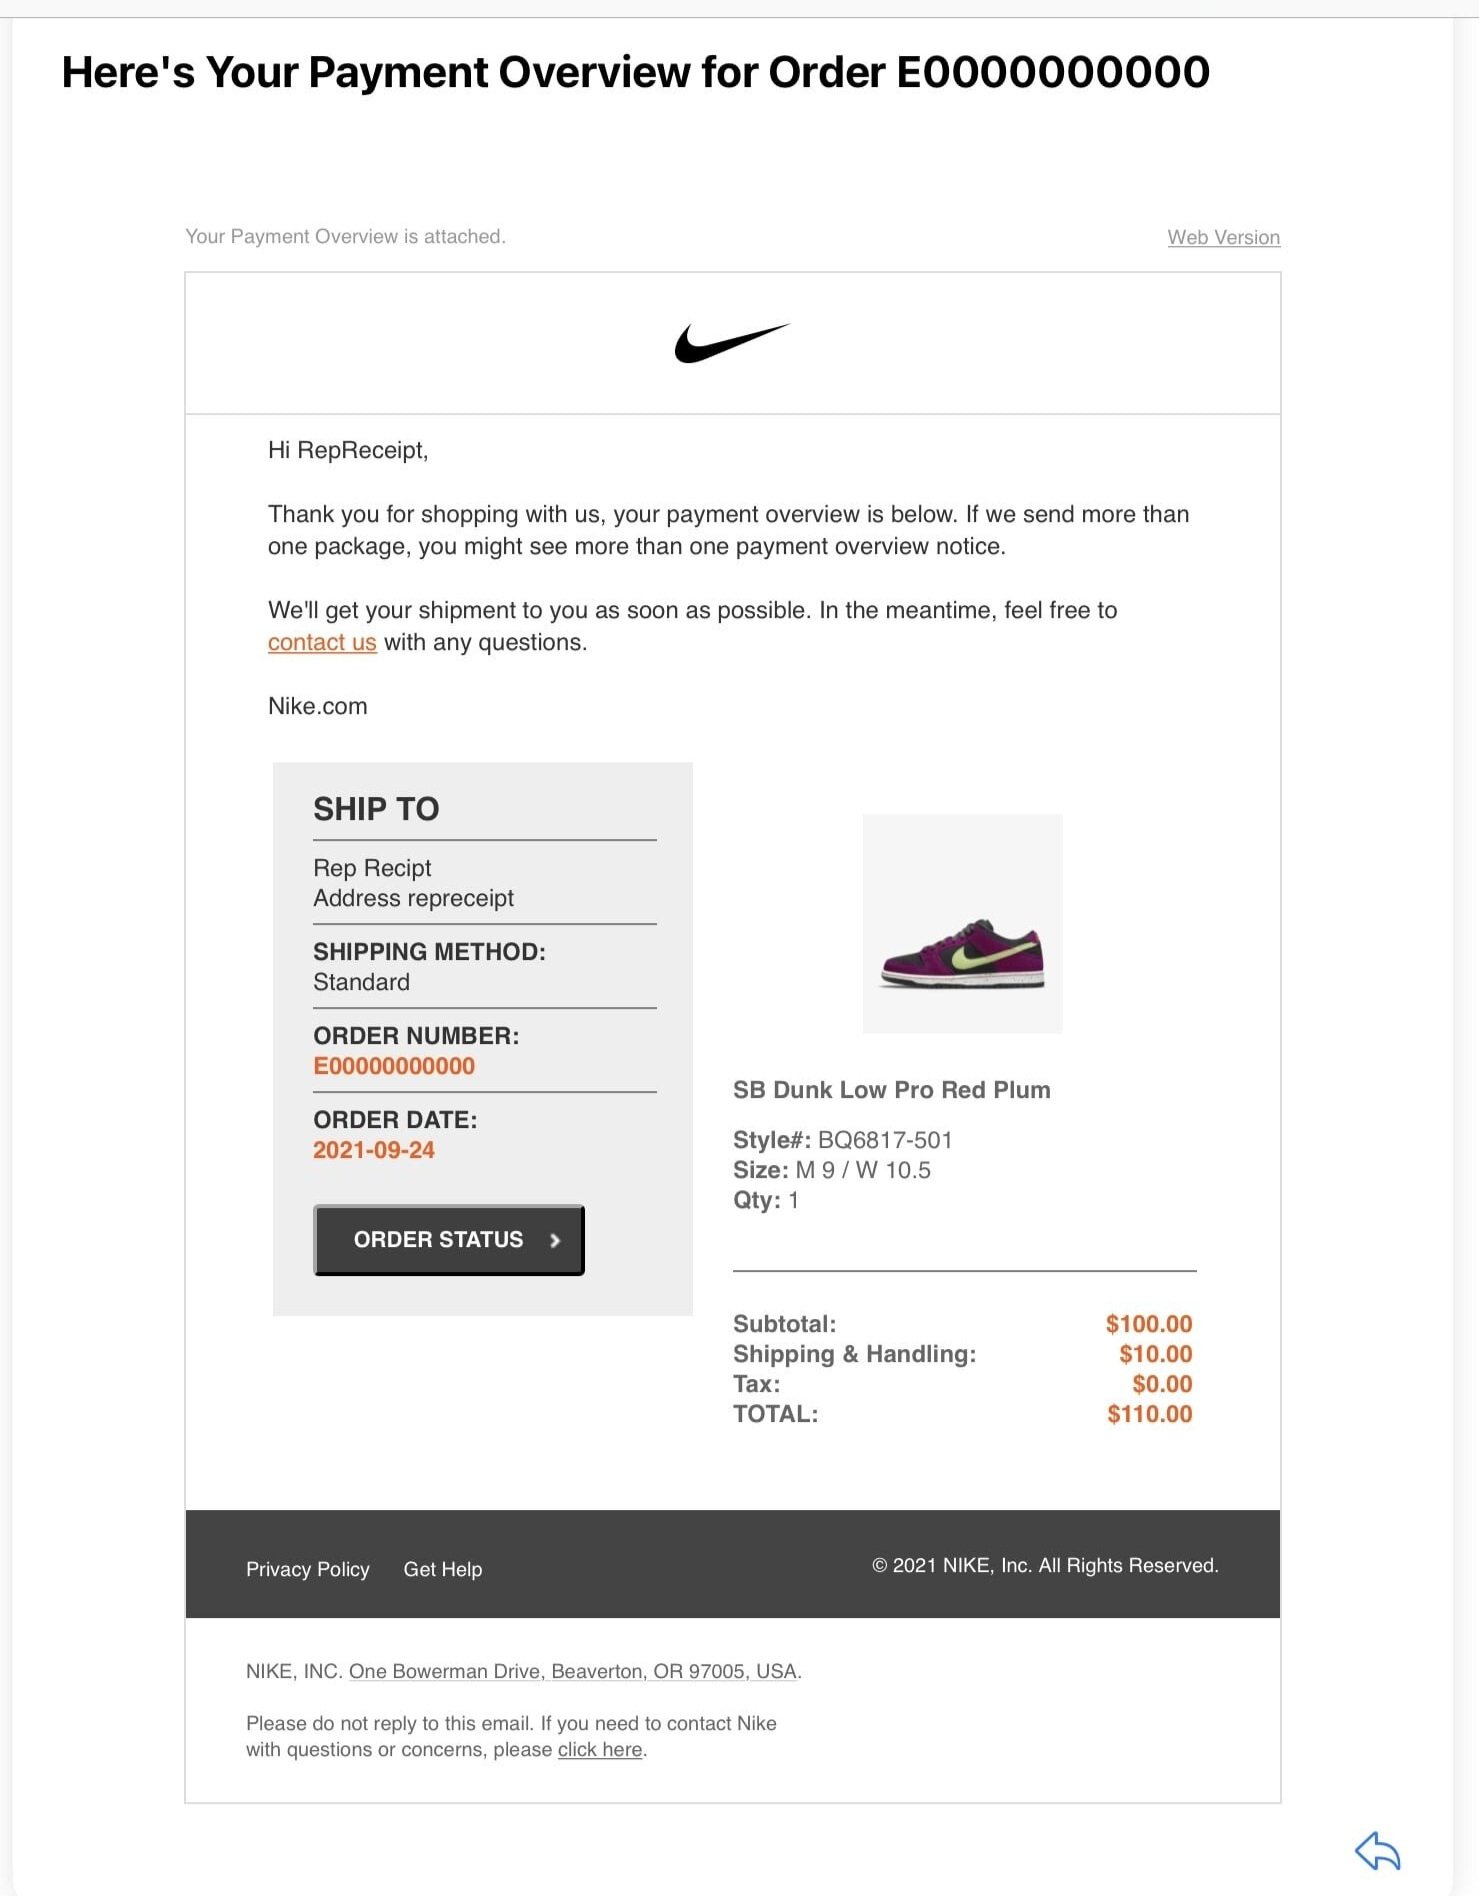 Nike SNKRS email receipt — RepReceipt